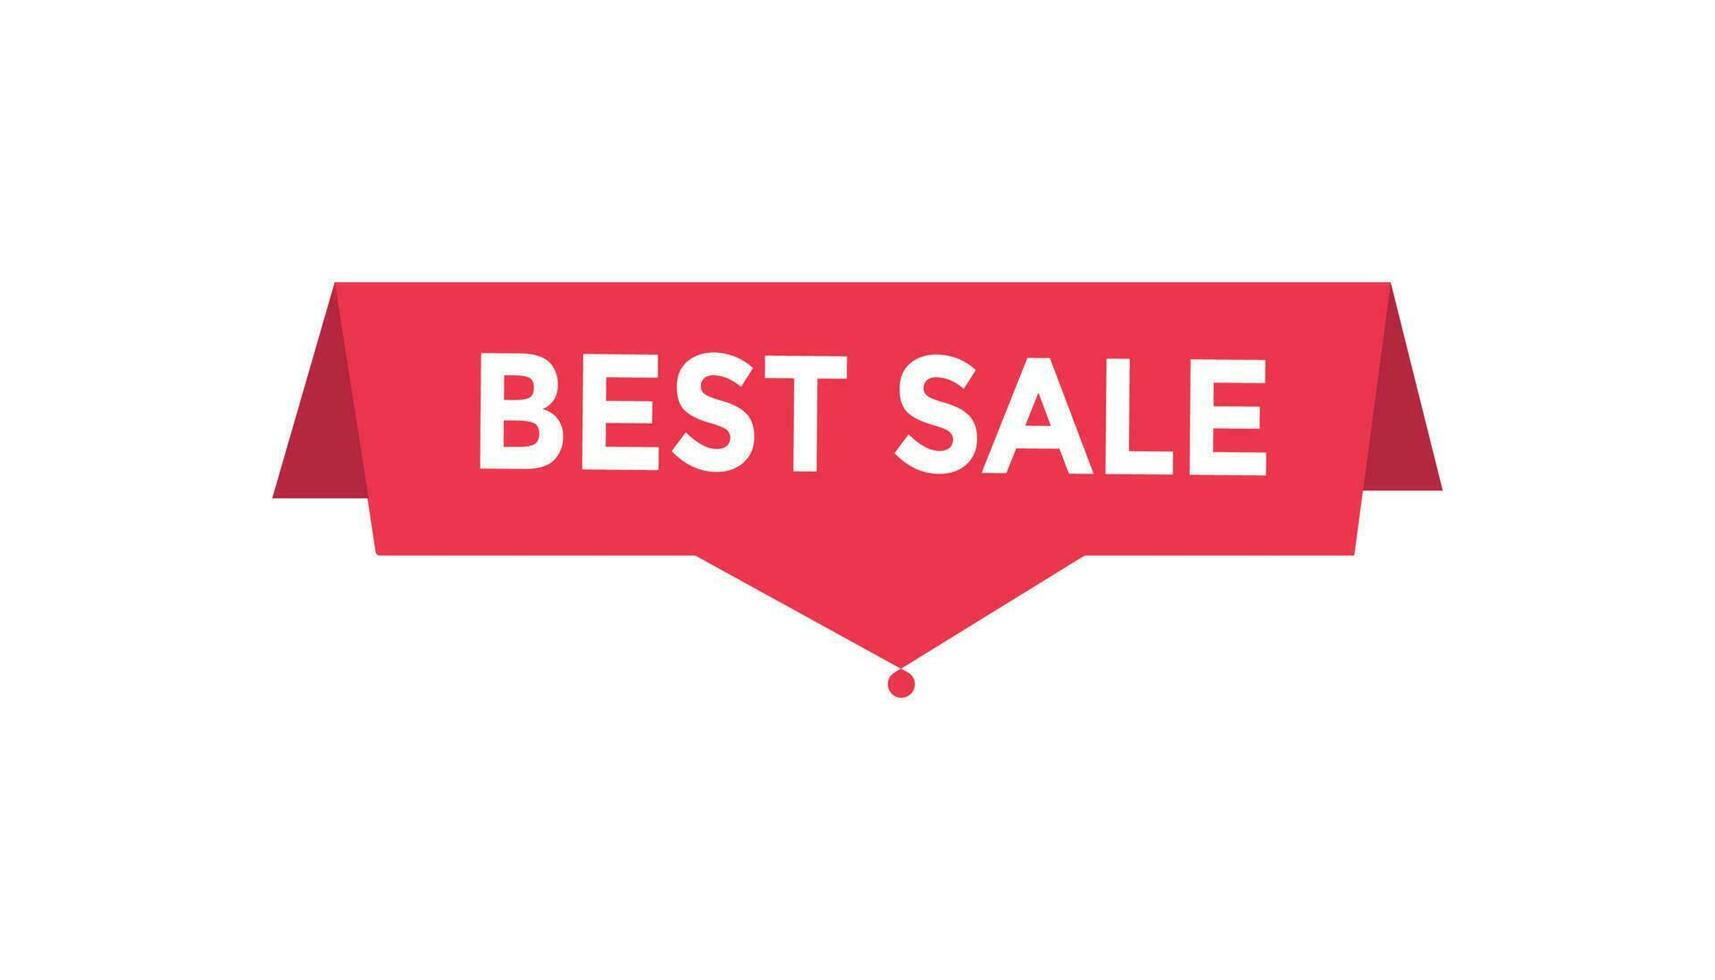 Best sale button web banner templates. Vector Illustration